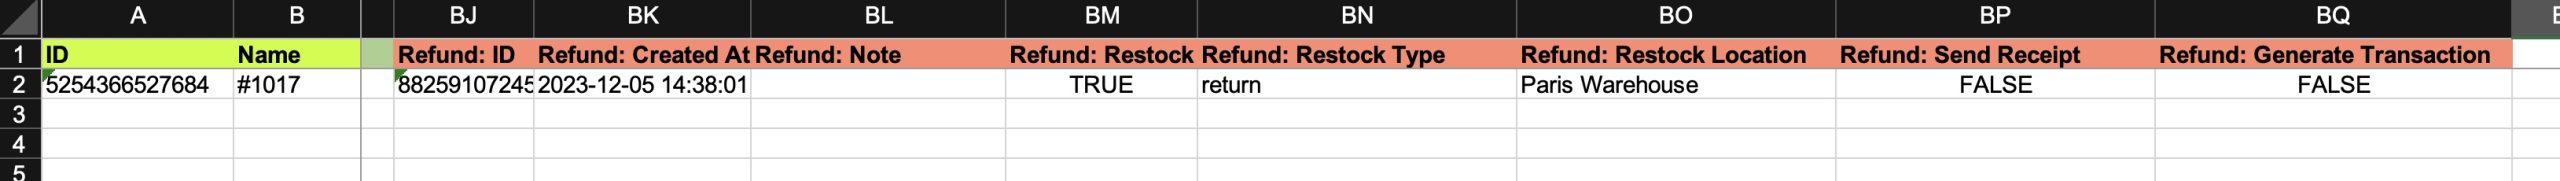 Refund Restock Location in Excel